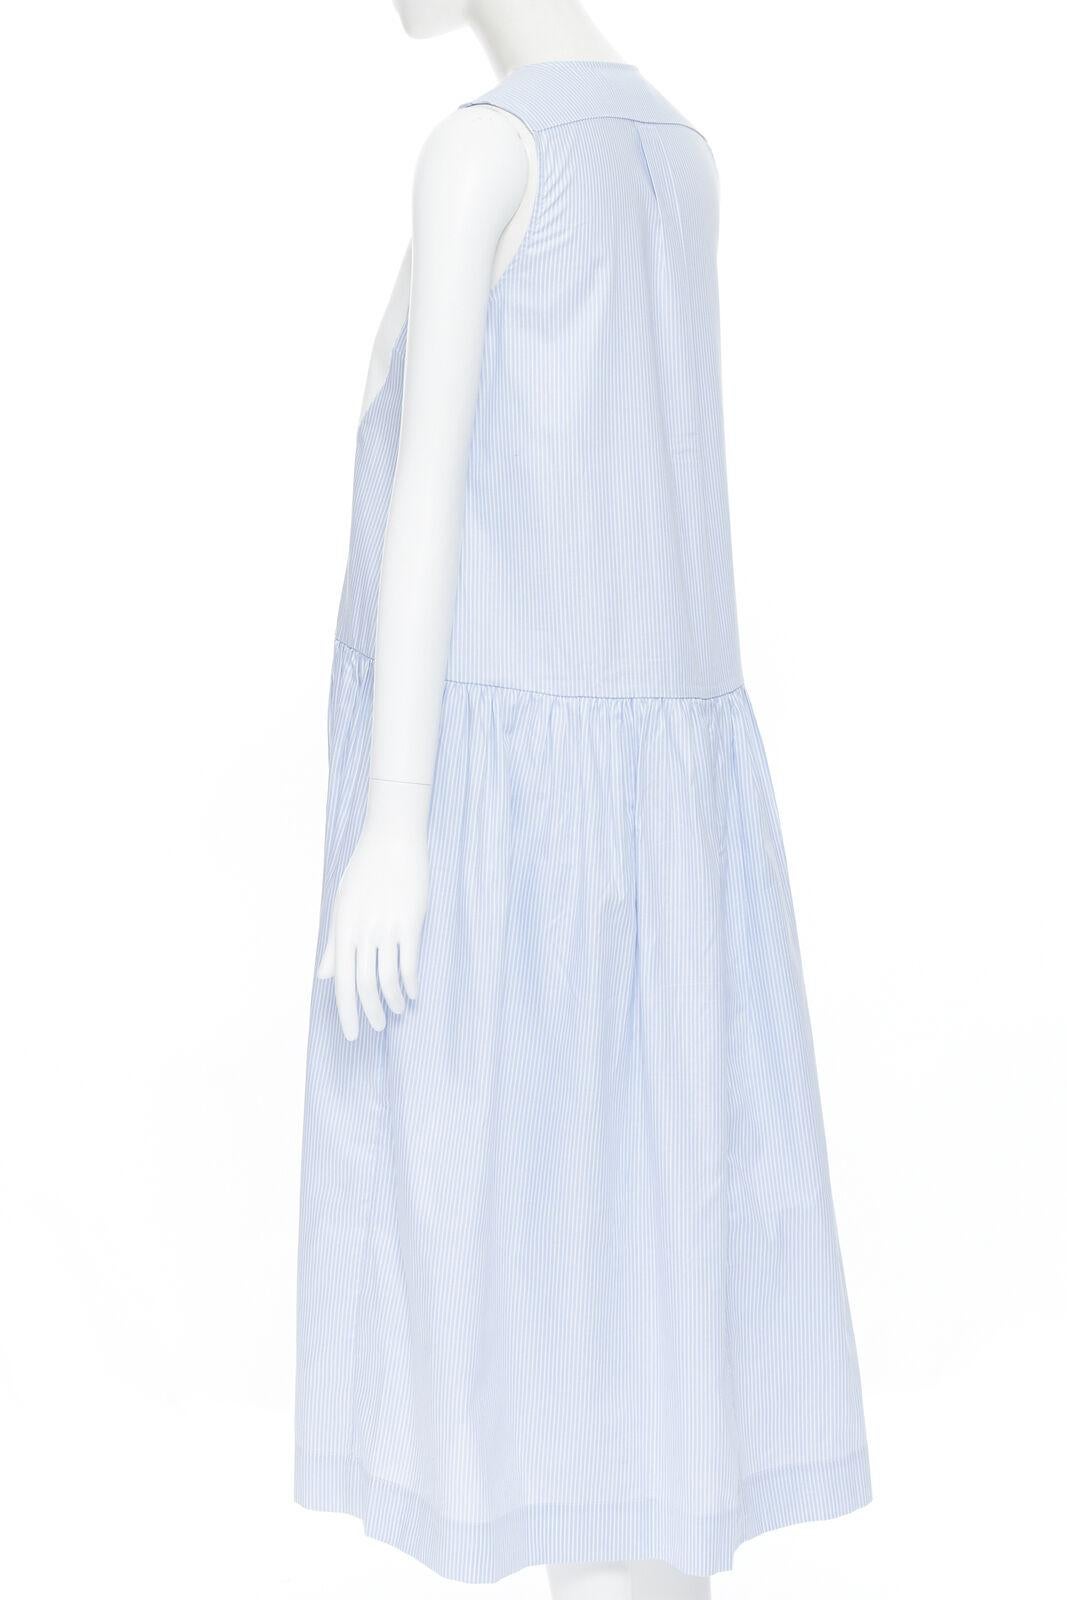 PALMER HARDING 100% cotton white bib front blue striped summer dress UK8 XS For Sale 3